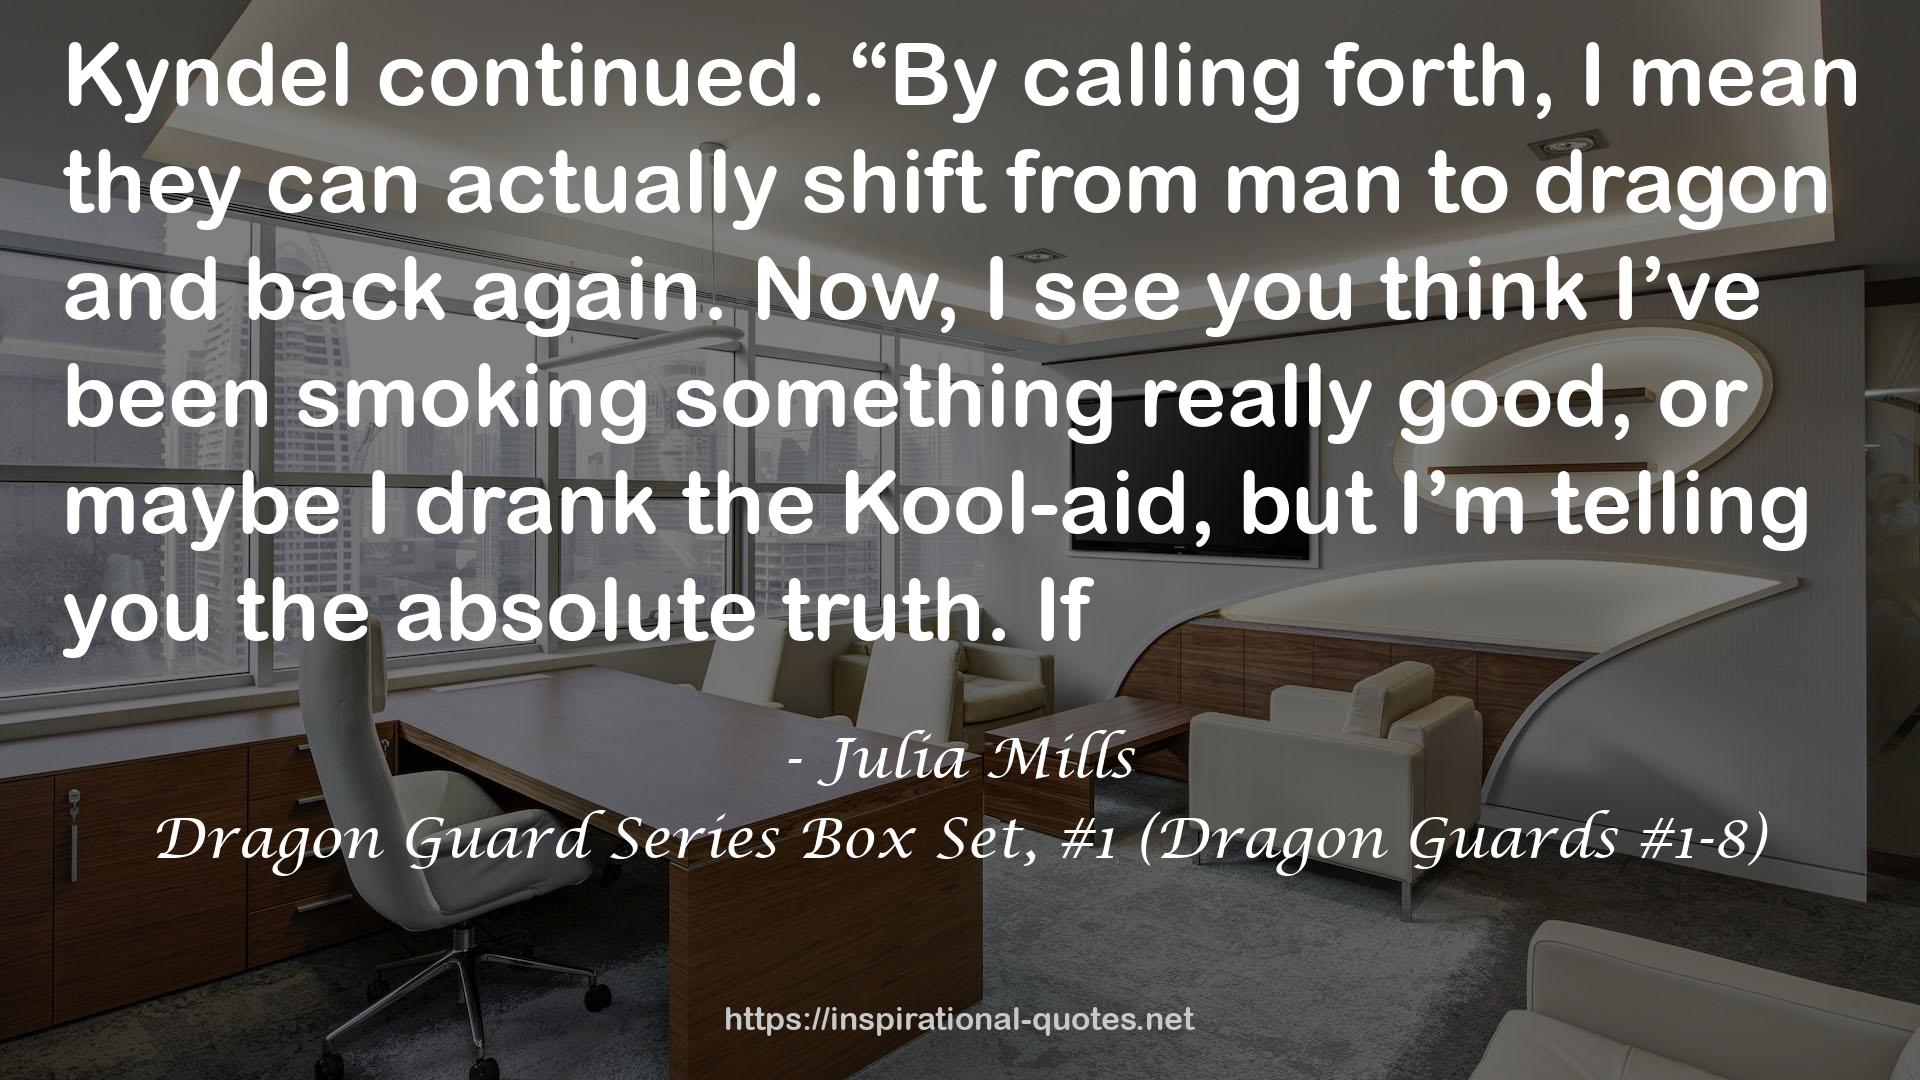 Dragon Guard Series Box Set, #1 (Dragon Guards #1-8) QUOTES